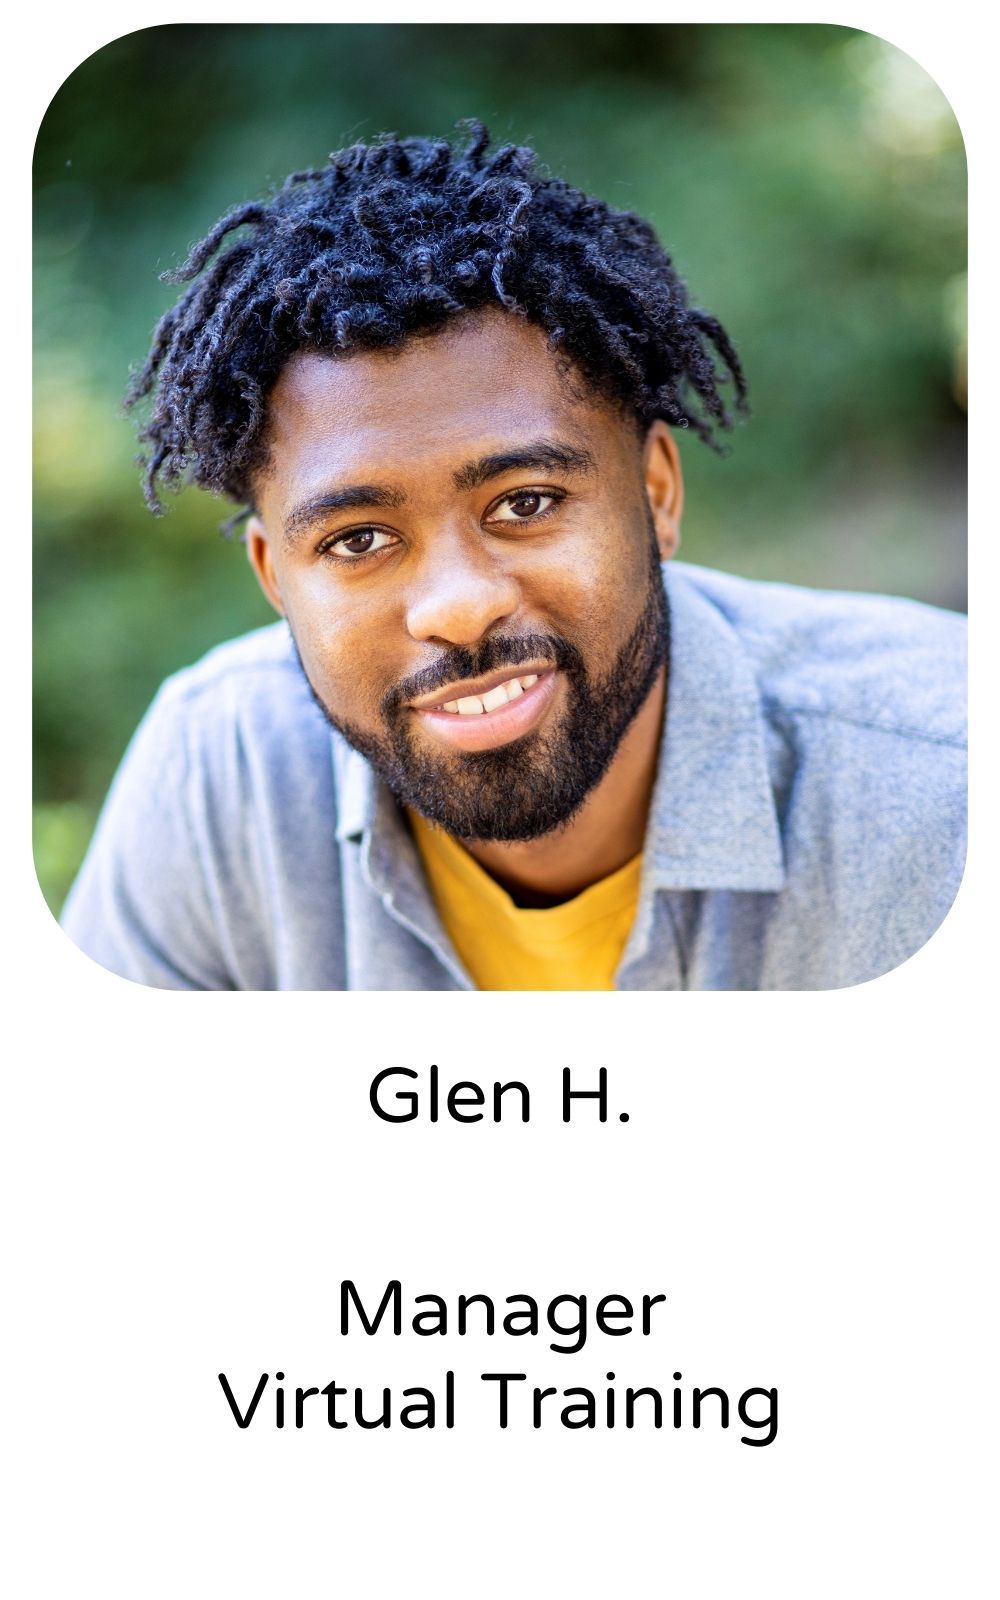 Glen H, Manager, Virtual Training